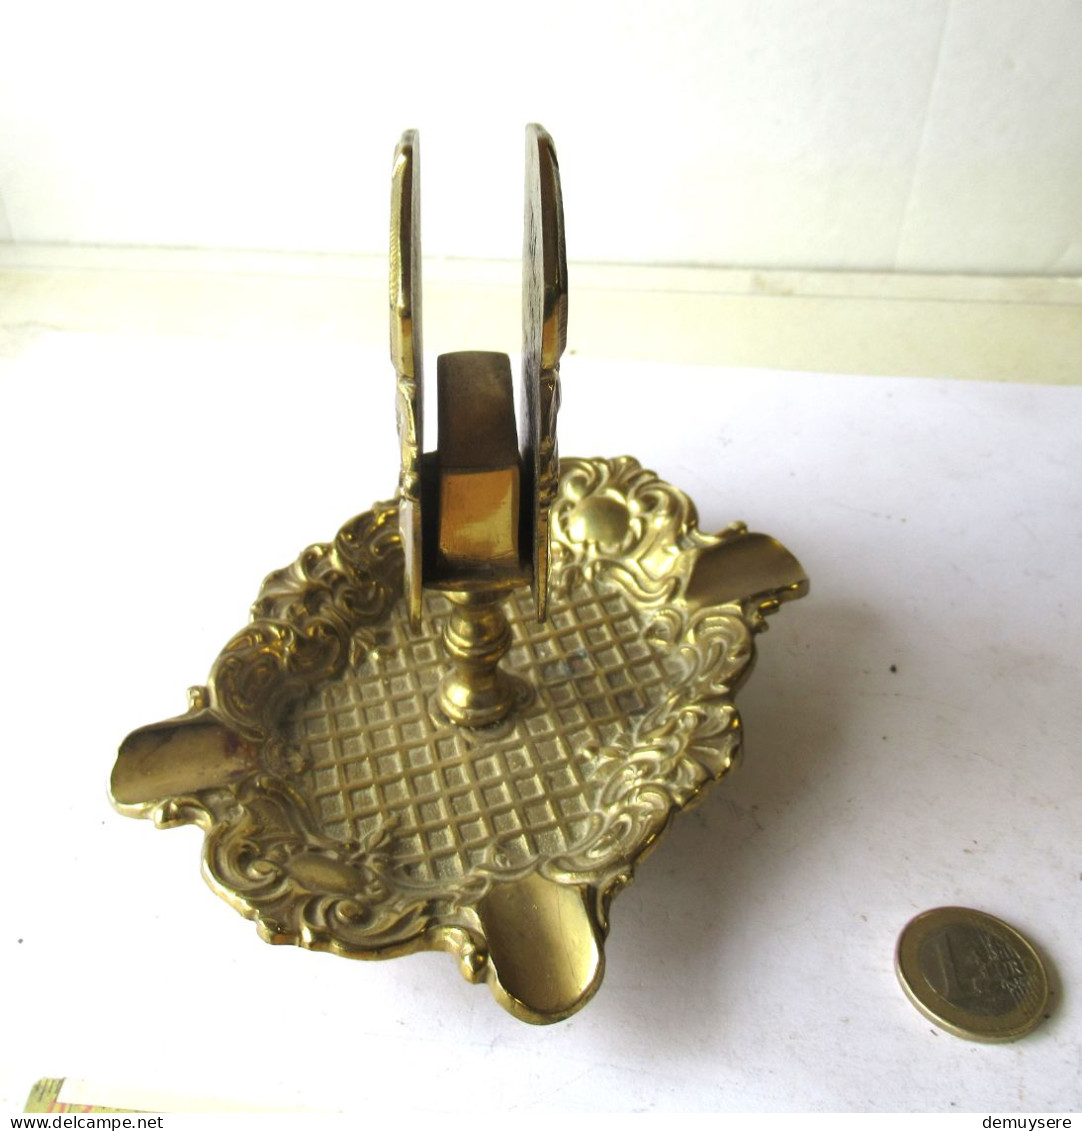 Lade 4000 - Bronzen Asbak Met Luciferhouder - Cendrier En Bronze Avec Porte Allumettes - 500 Gram - Bronzes